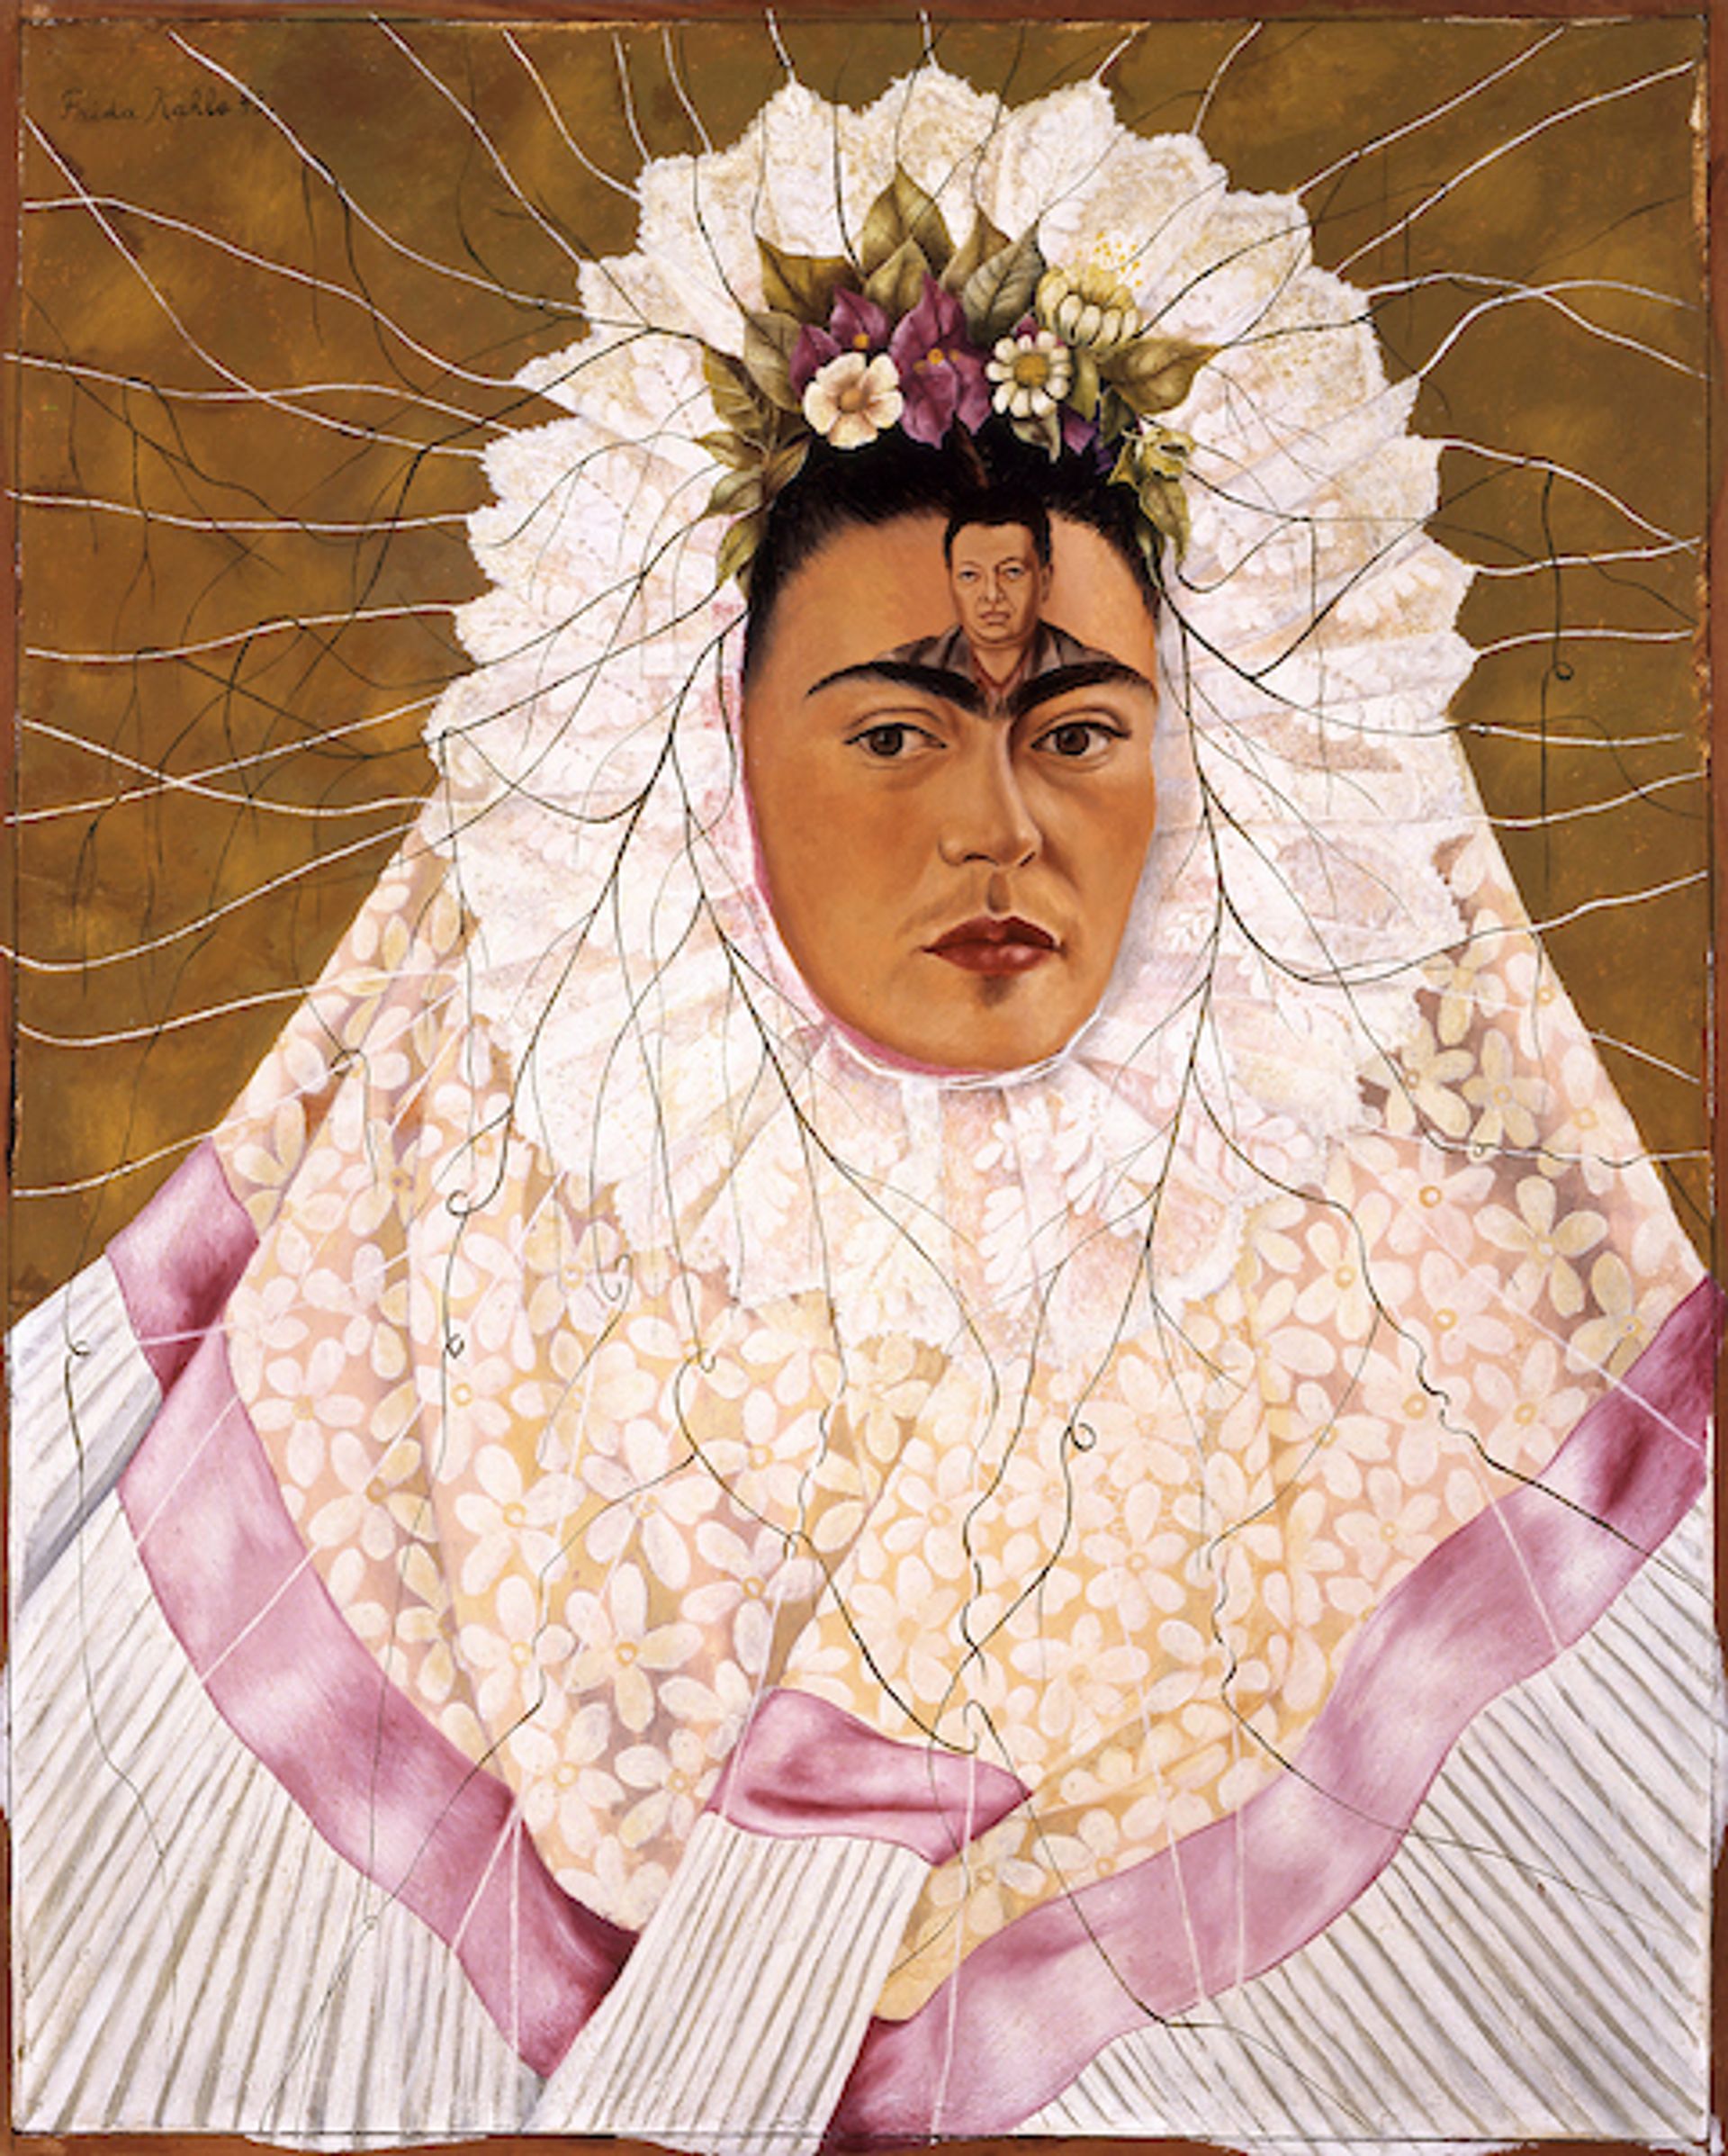 Frida Kahlo, Self-Portrait as a Tehuana (1943) © 2019 Banco de México Diego Rivera Frida Kahlo Museums Trust, Mexico, D.F. / Artists Rights Society (ARS), New York